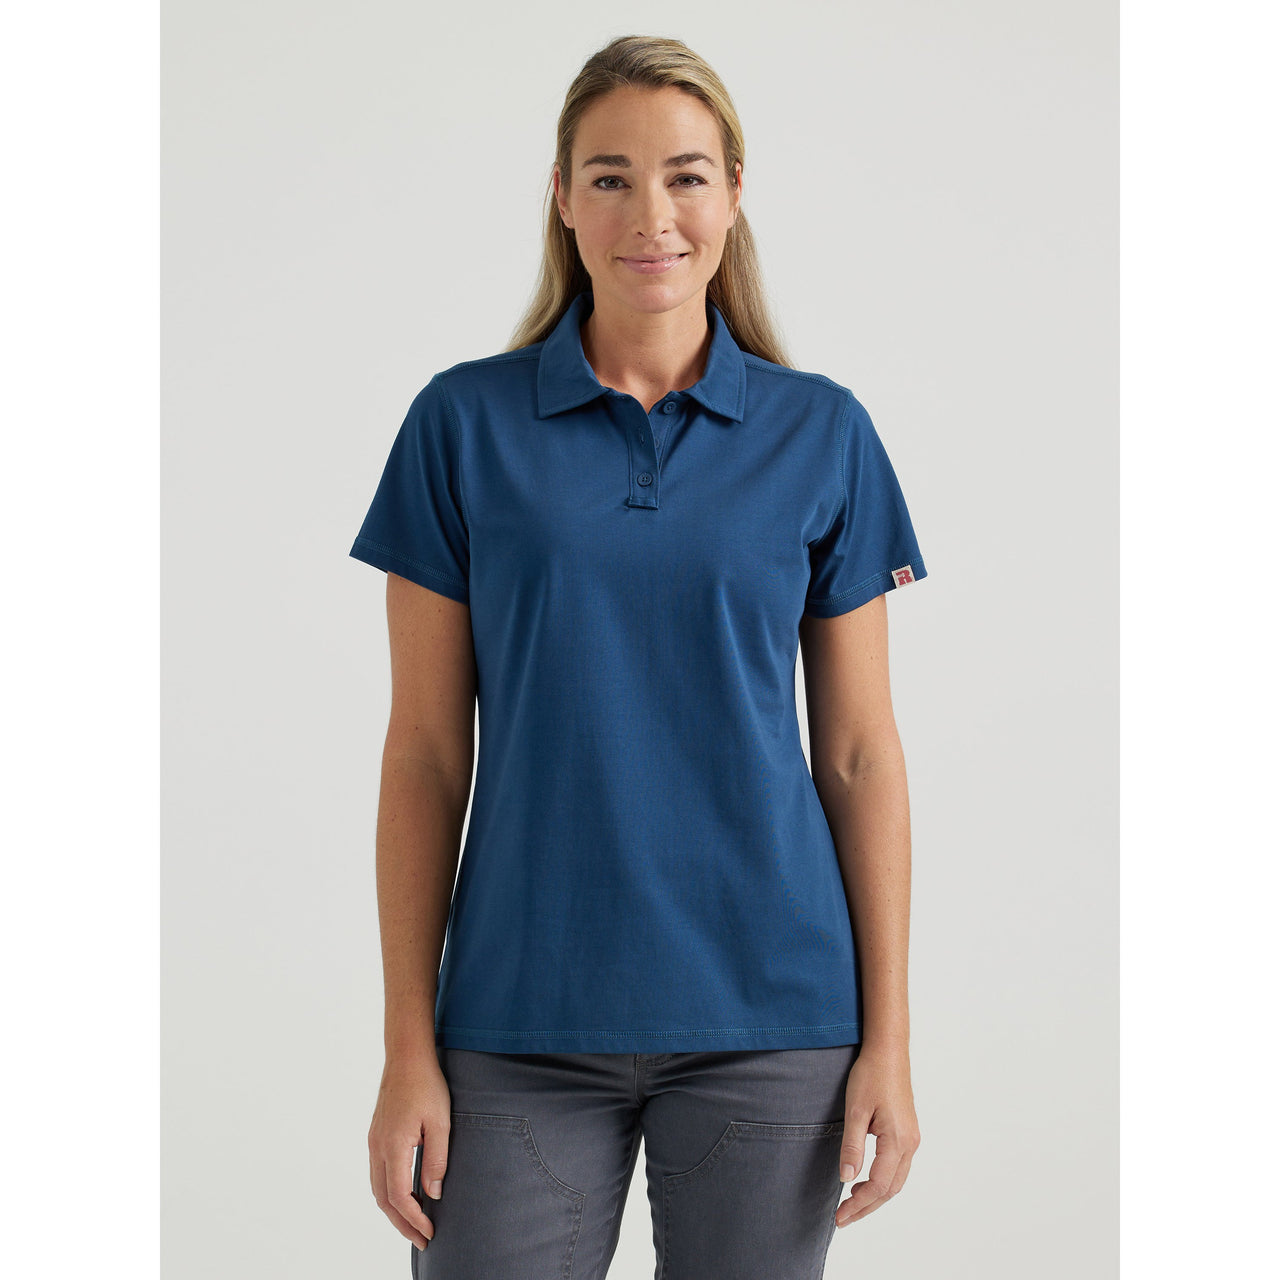 Wrangler Women's Riggs Performance Knit Short Sleeve Polo Shirt - Navy